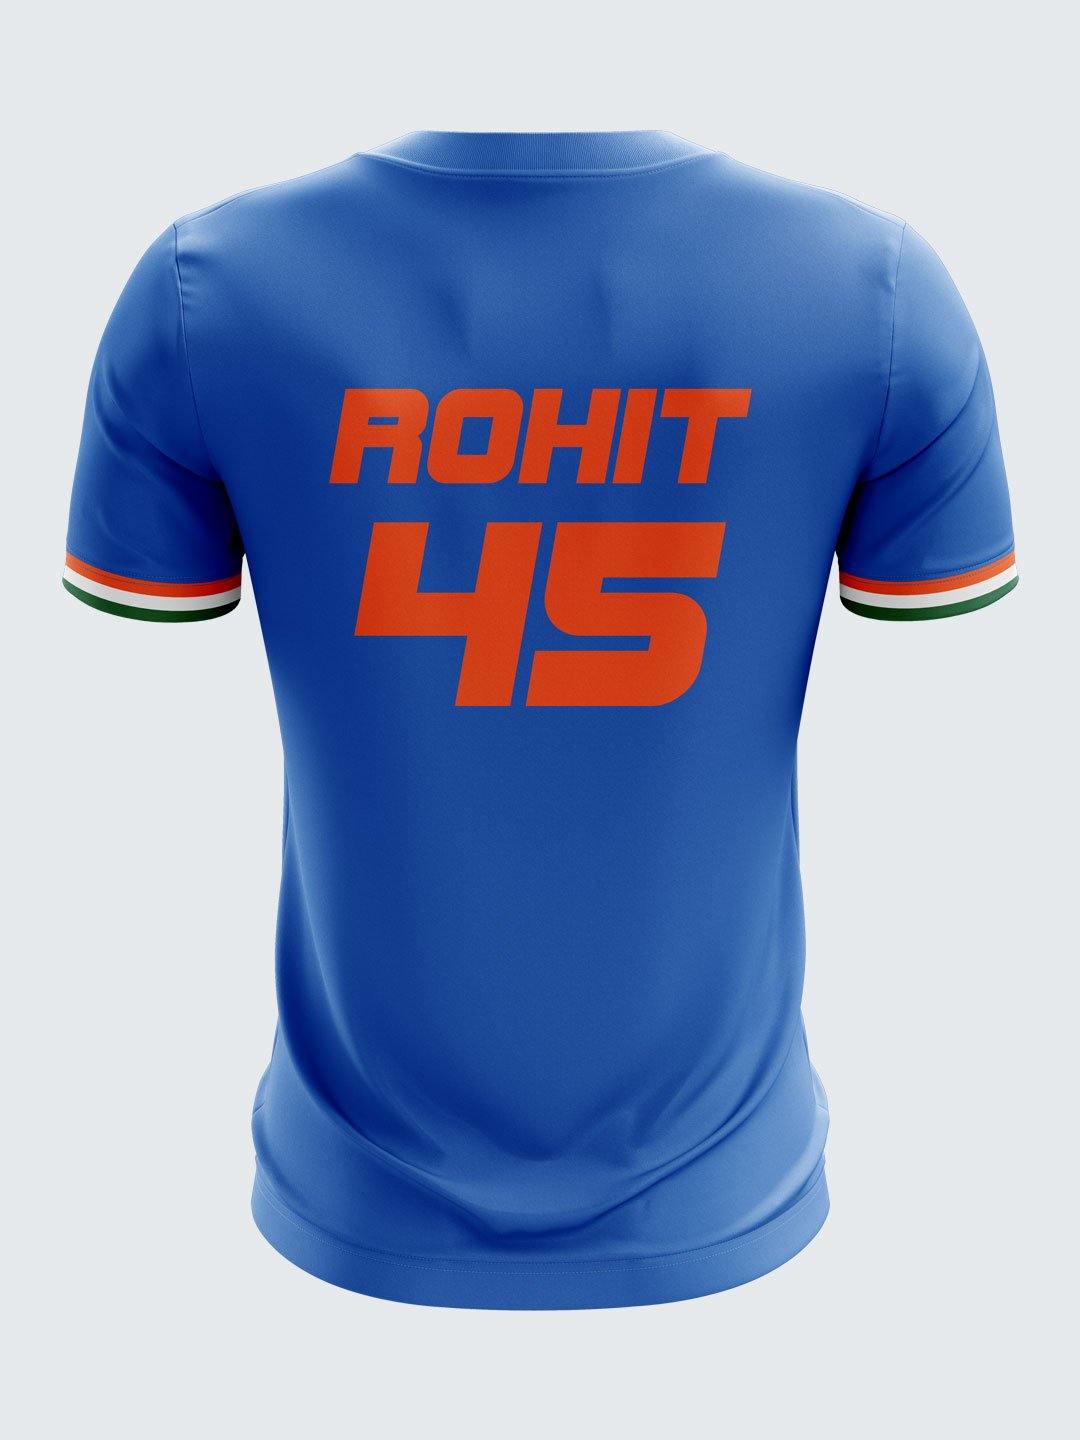 rohit sharma jersey online